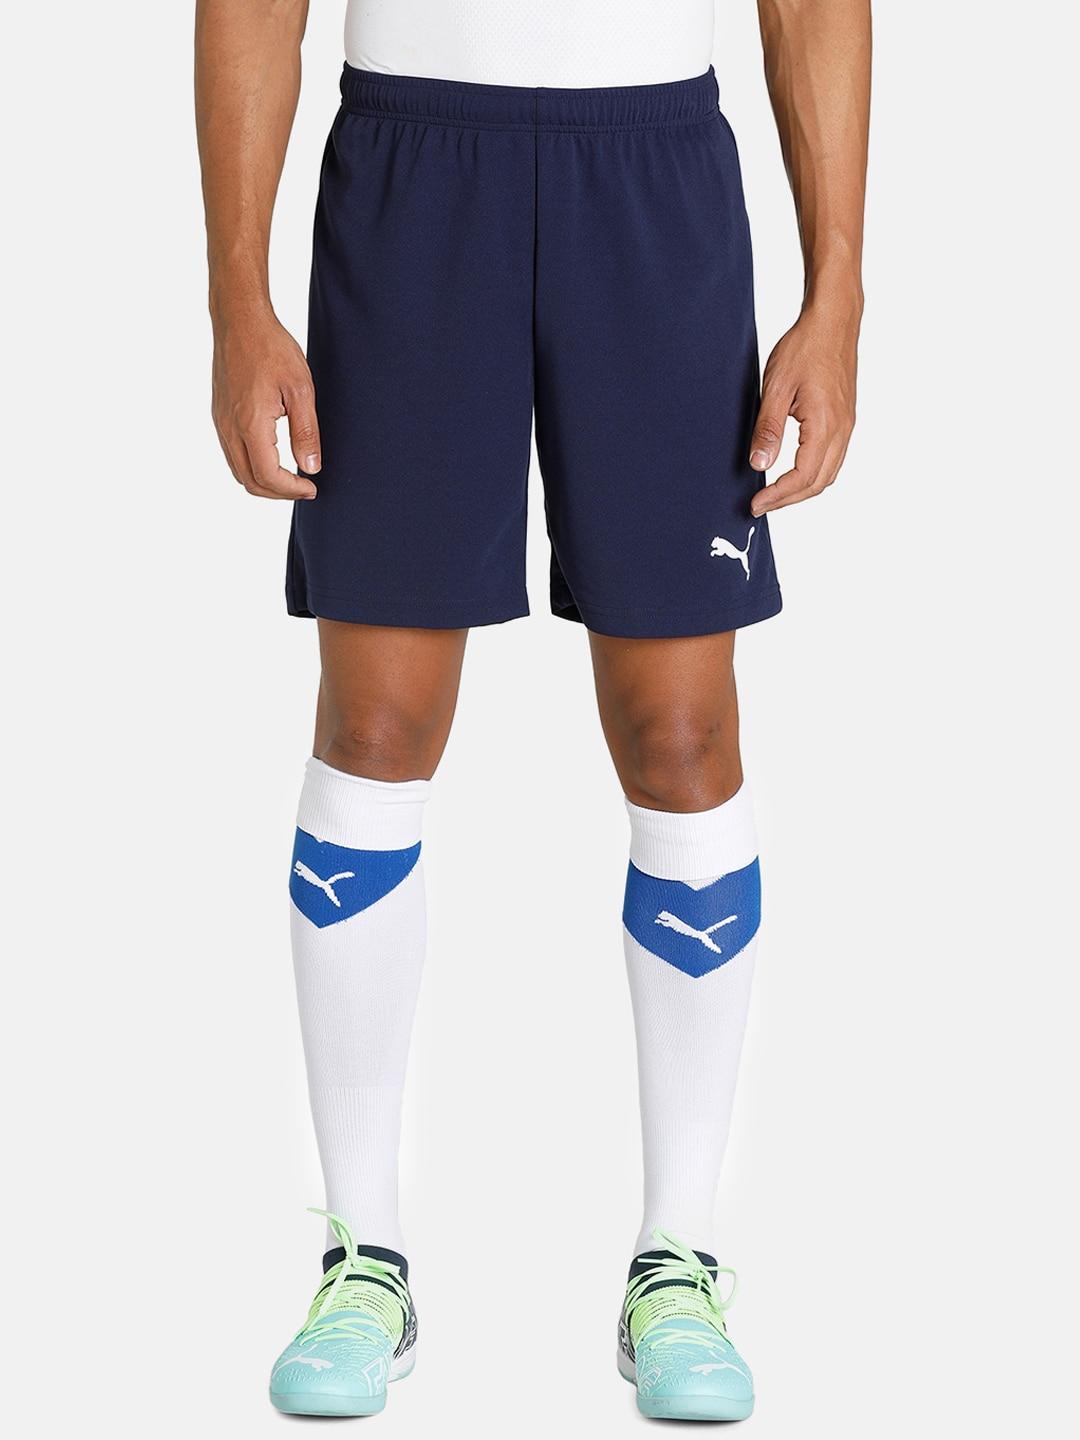 Puma Men Navy Blue Solid dryCELL Football Shorts